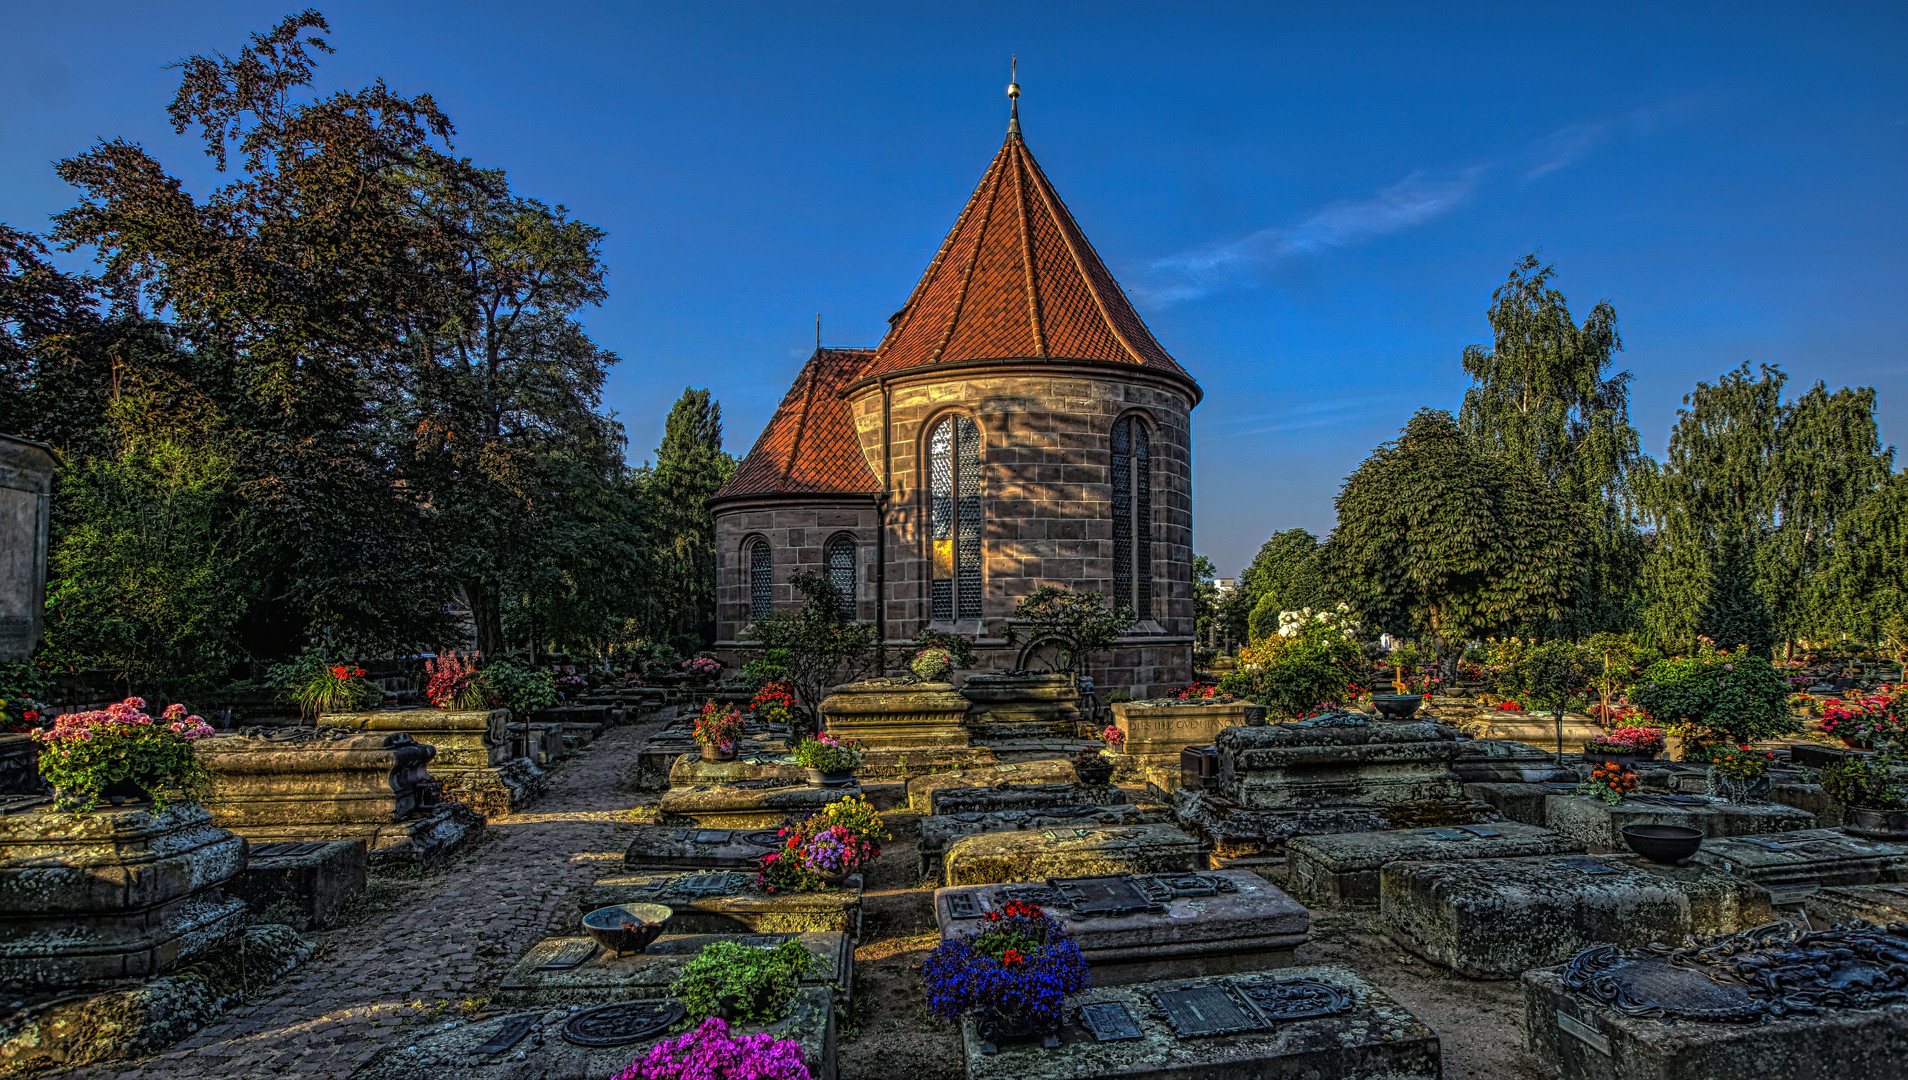 Johannisfriedhof Nürnberg